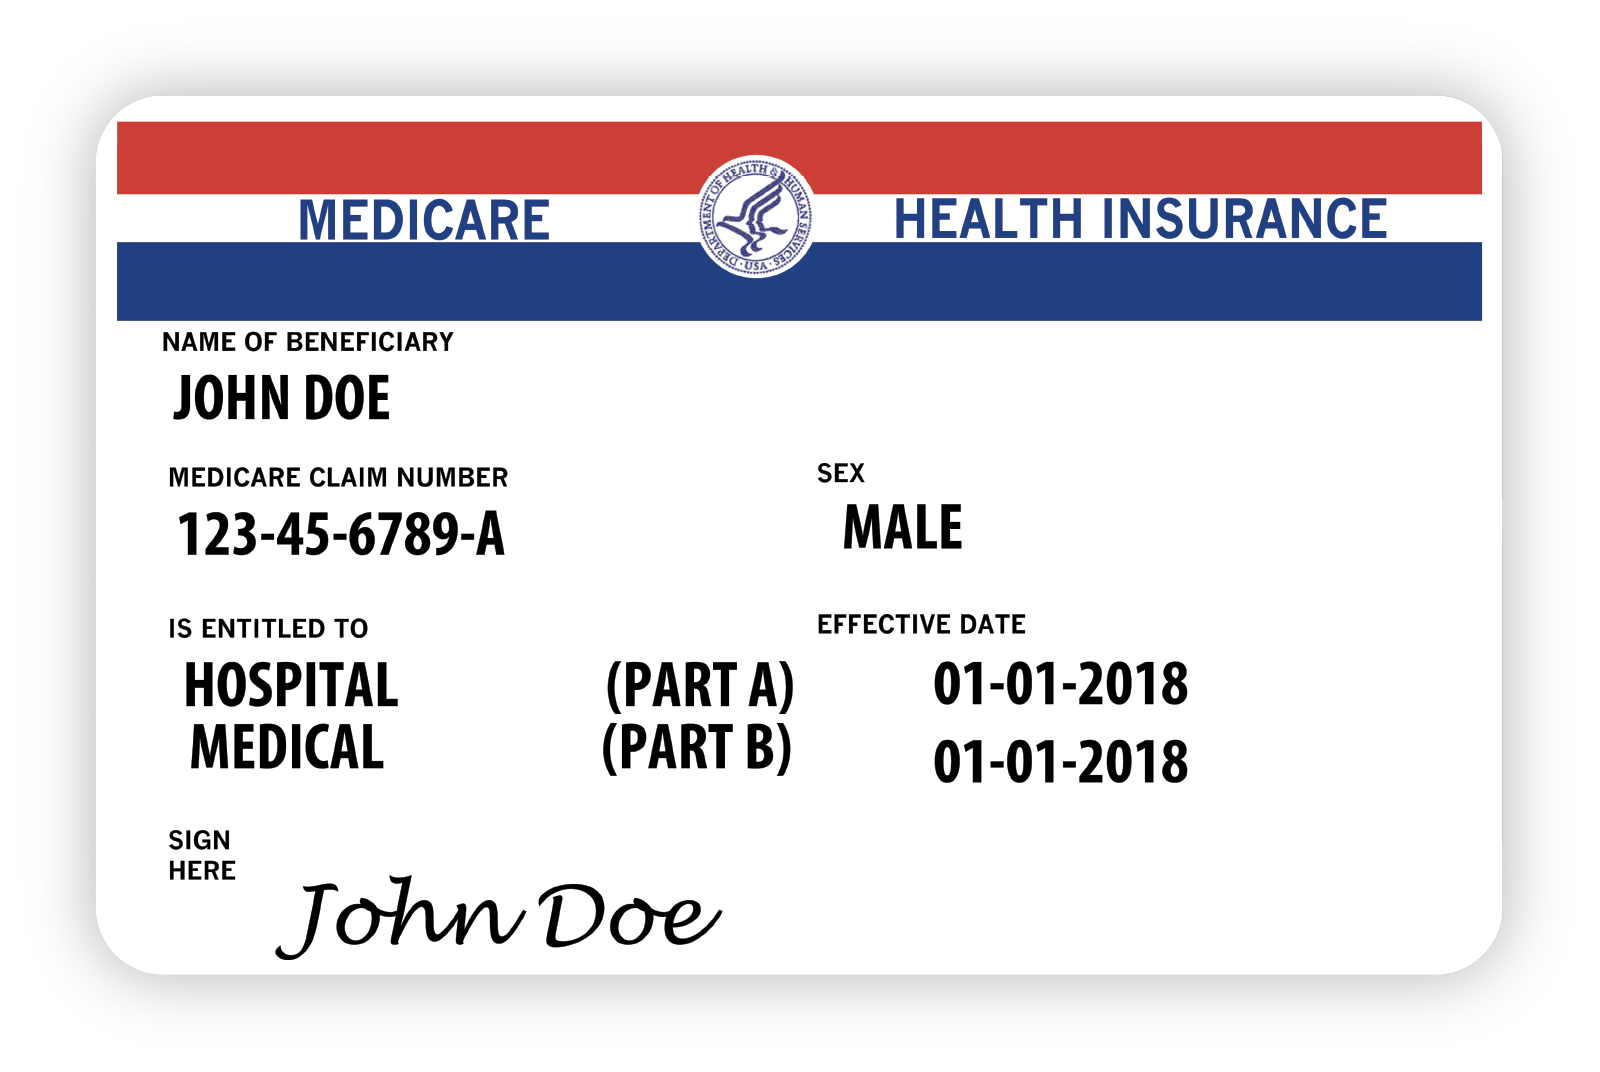 Medicare Insurance card